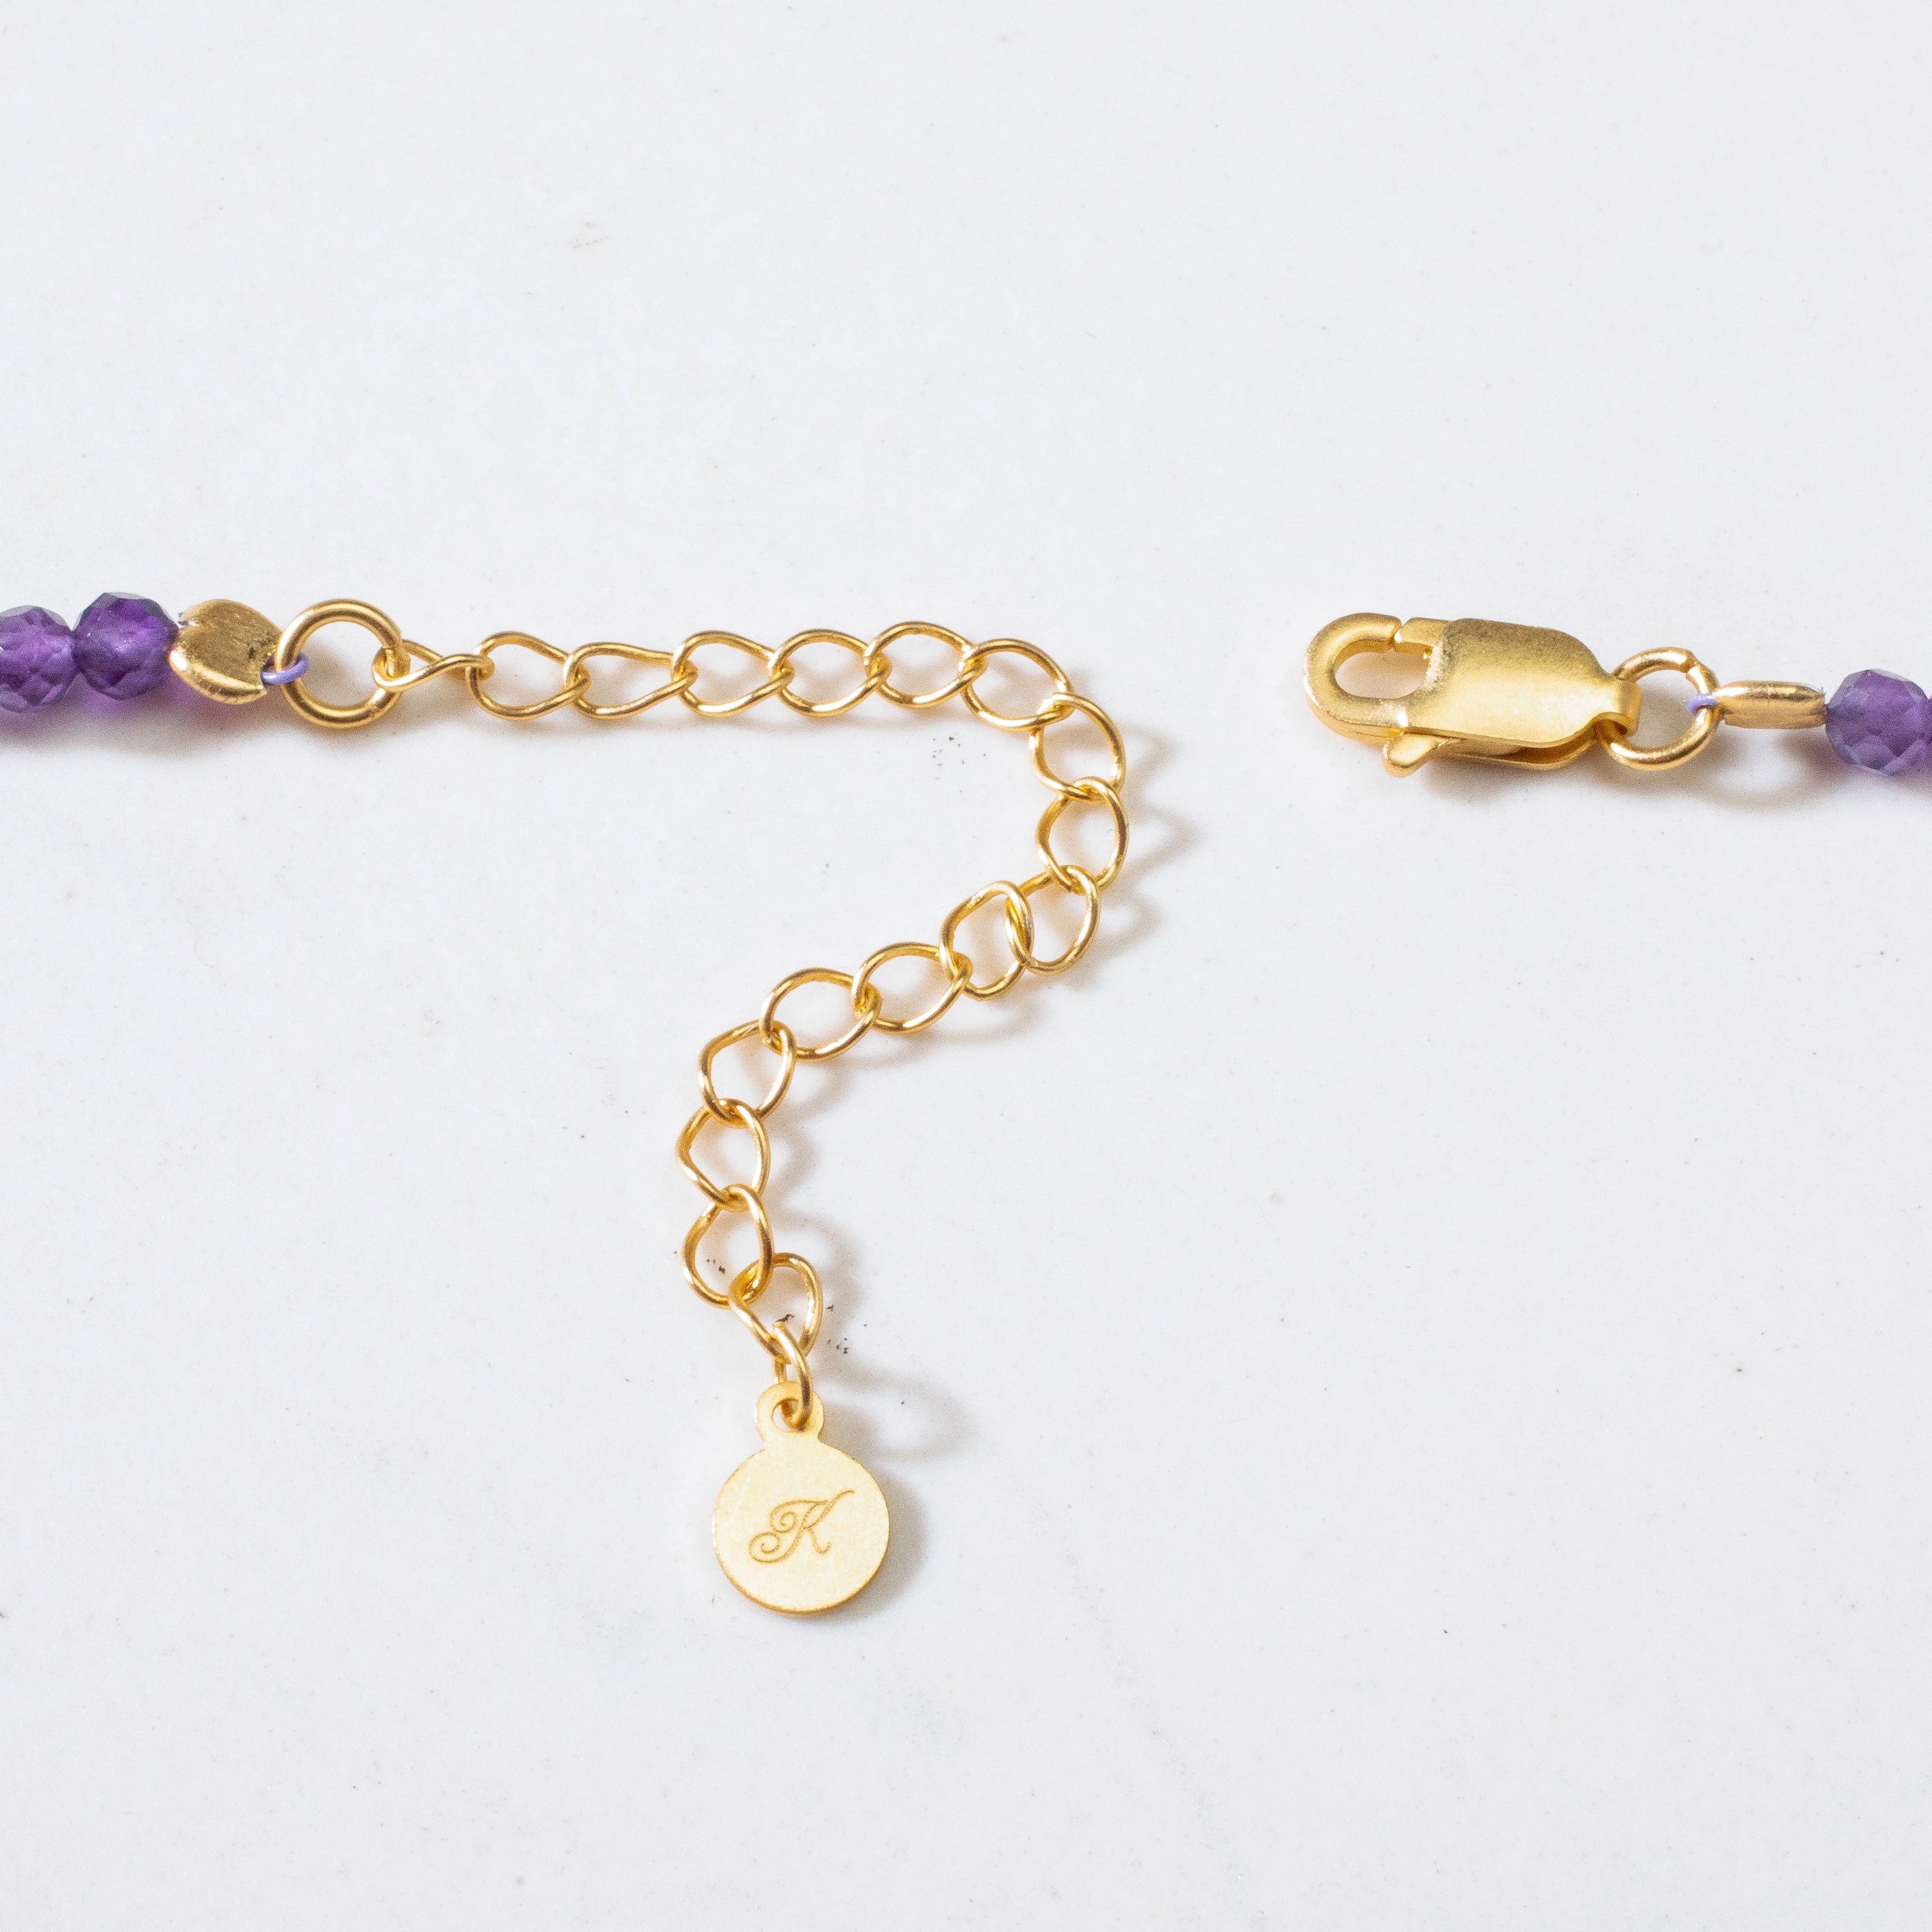 KALIFANO Gemstone Jewelry 3mm Amethyst Faceted 31" Necklace / Multi Wrap Bracelet N3-79G-AM